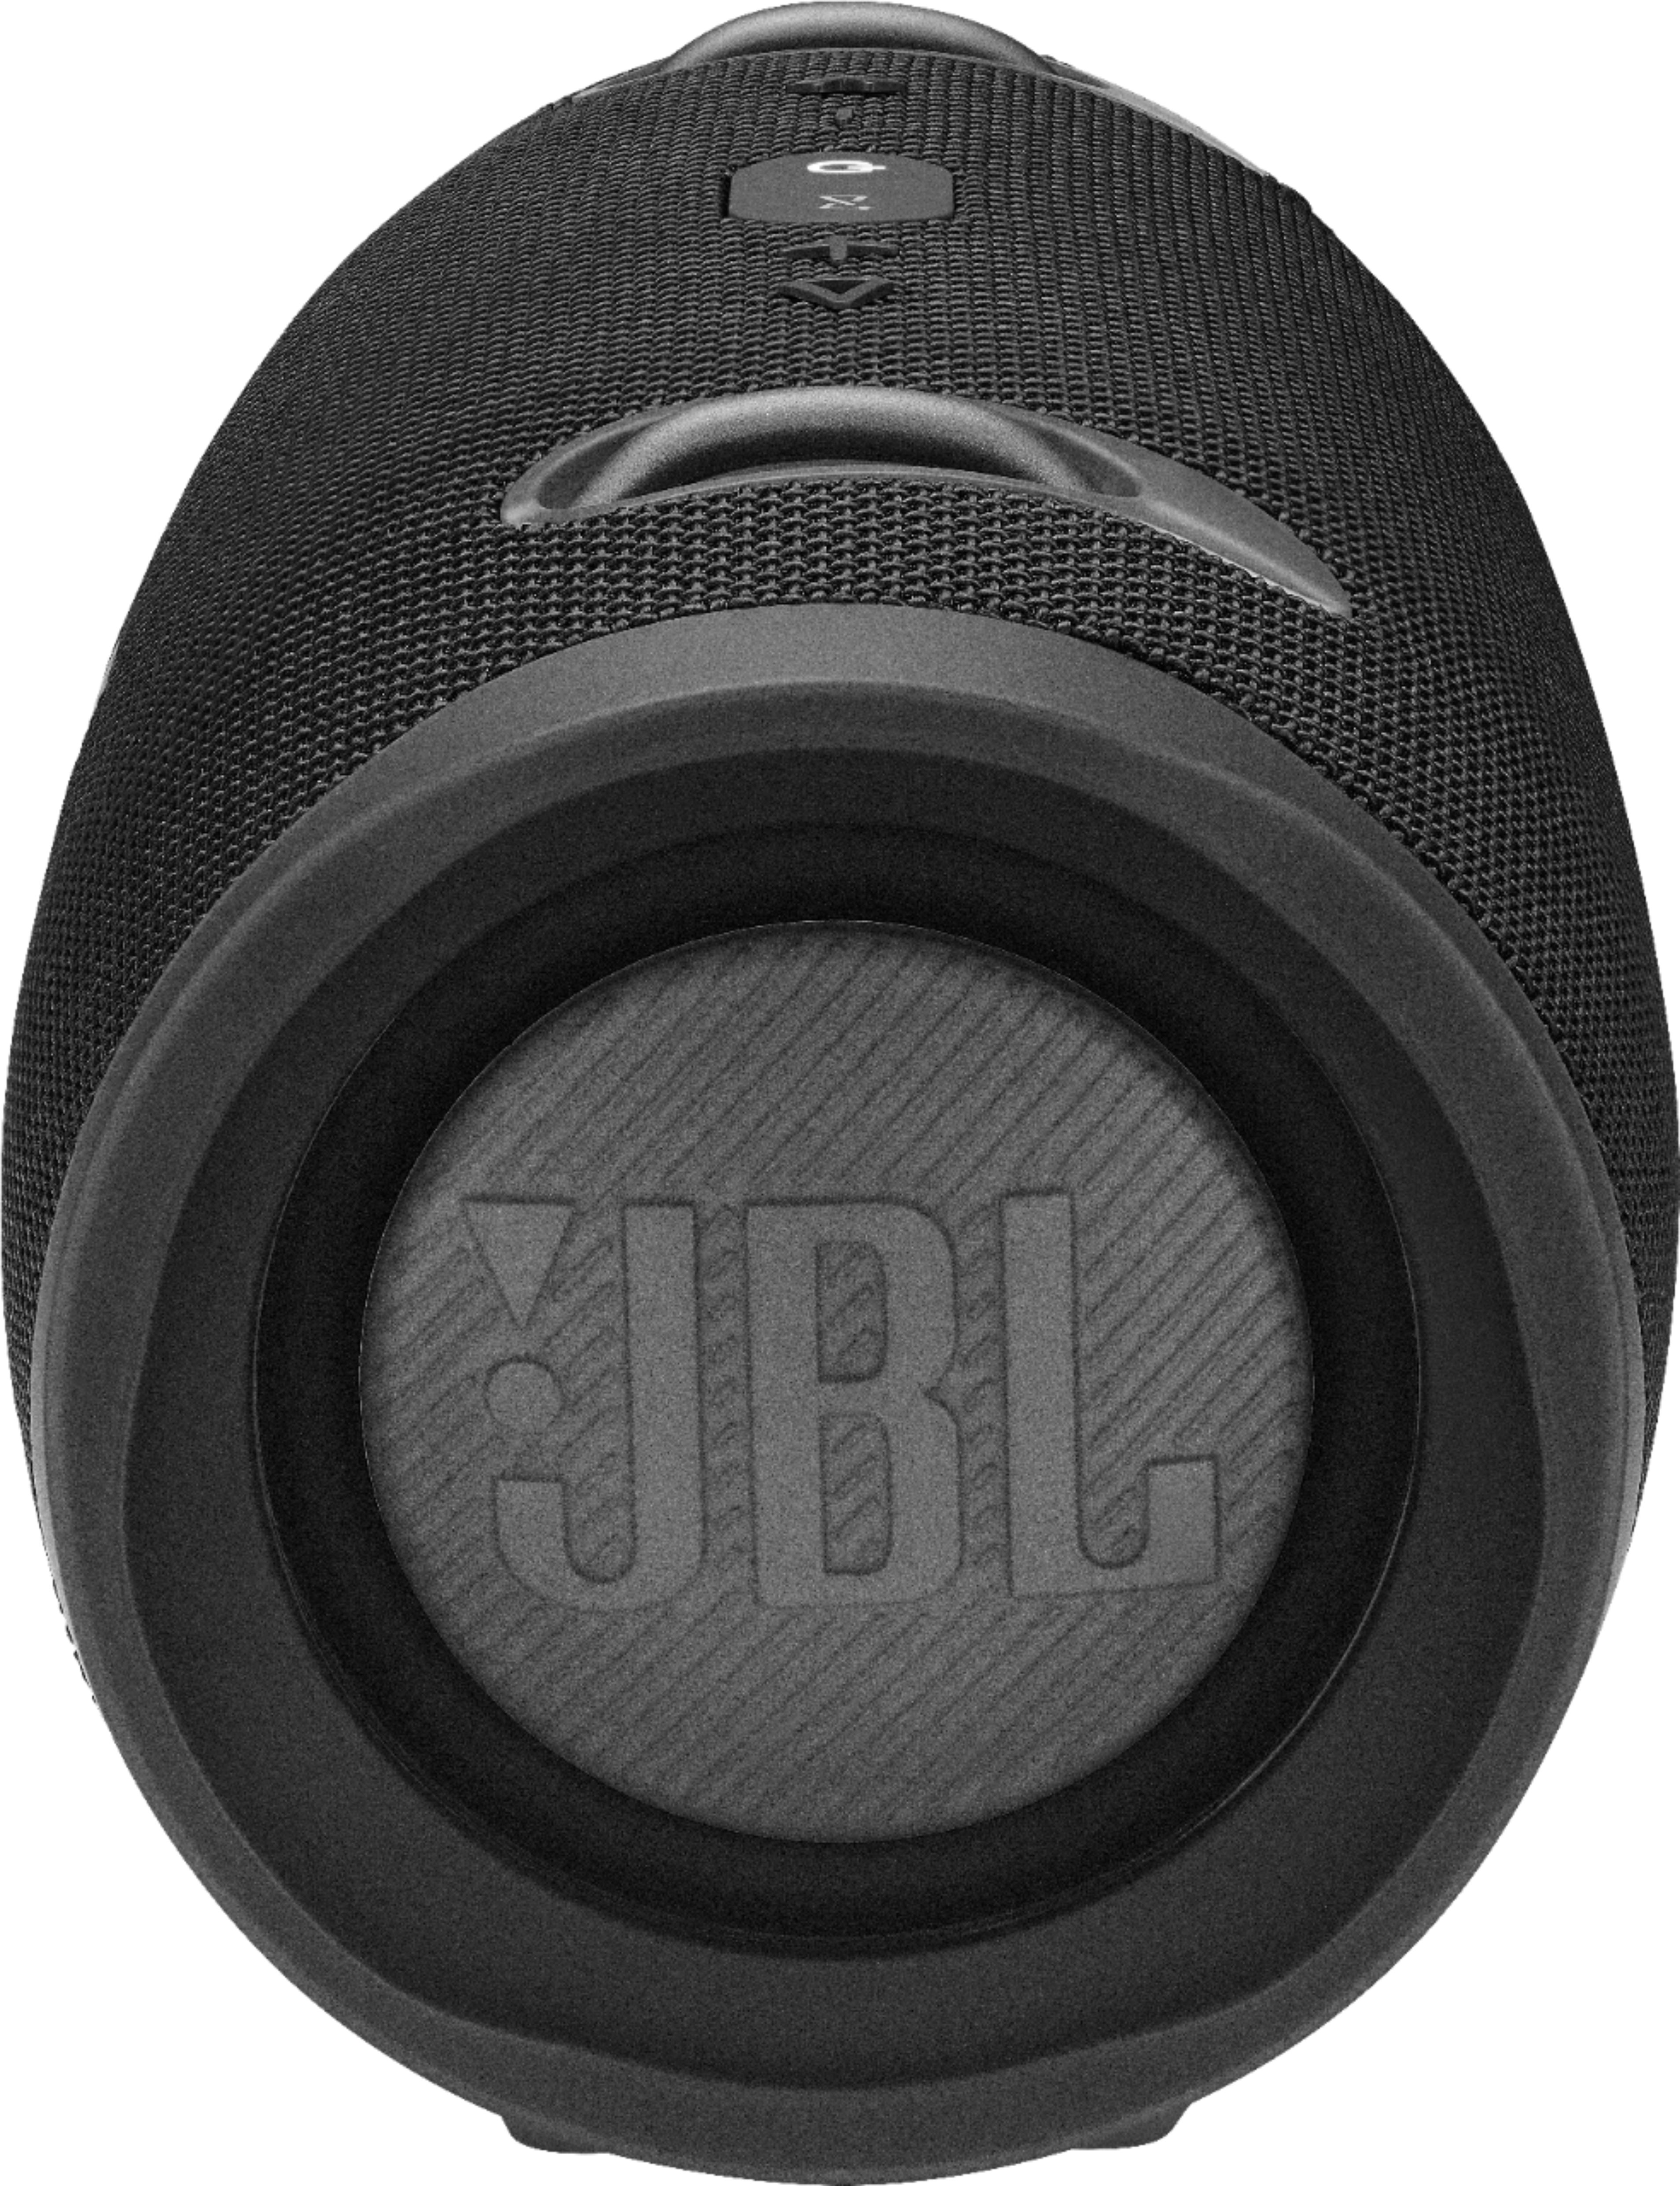 JBL Xtreme 2 Enceinte Bluetooth sans fil - waterproof